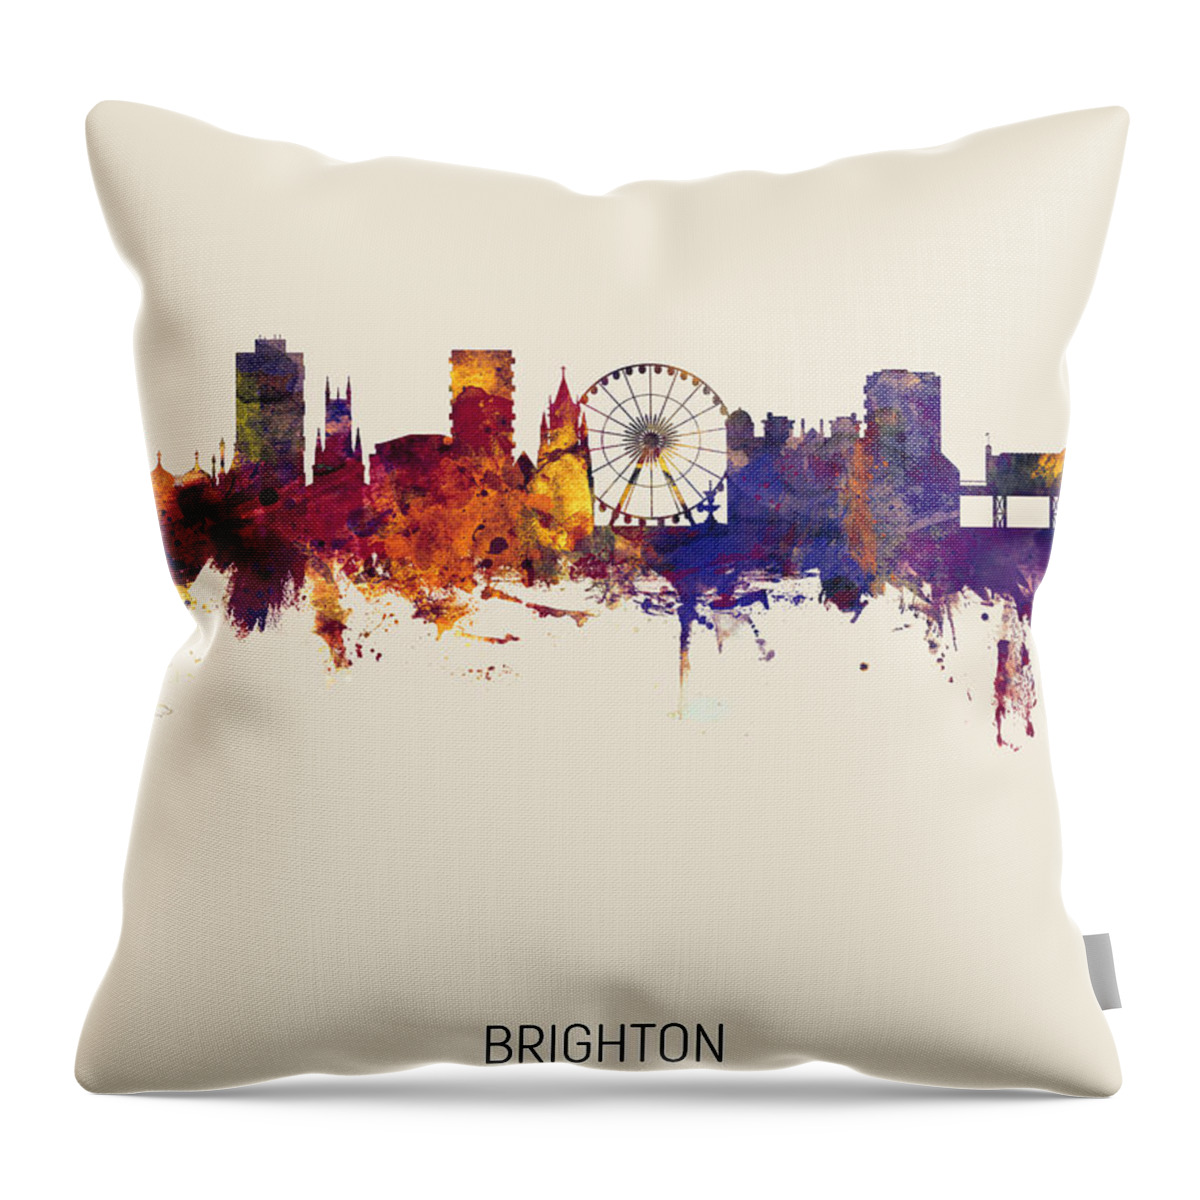 Brighton Throw Pillow featuring the digital art Brighton England Skyline #9 by Michael Tompsett